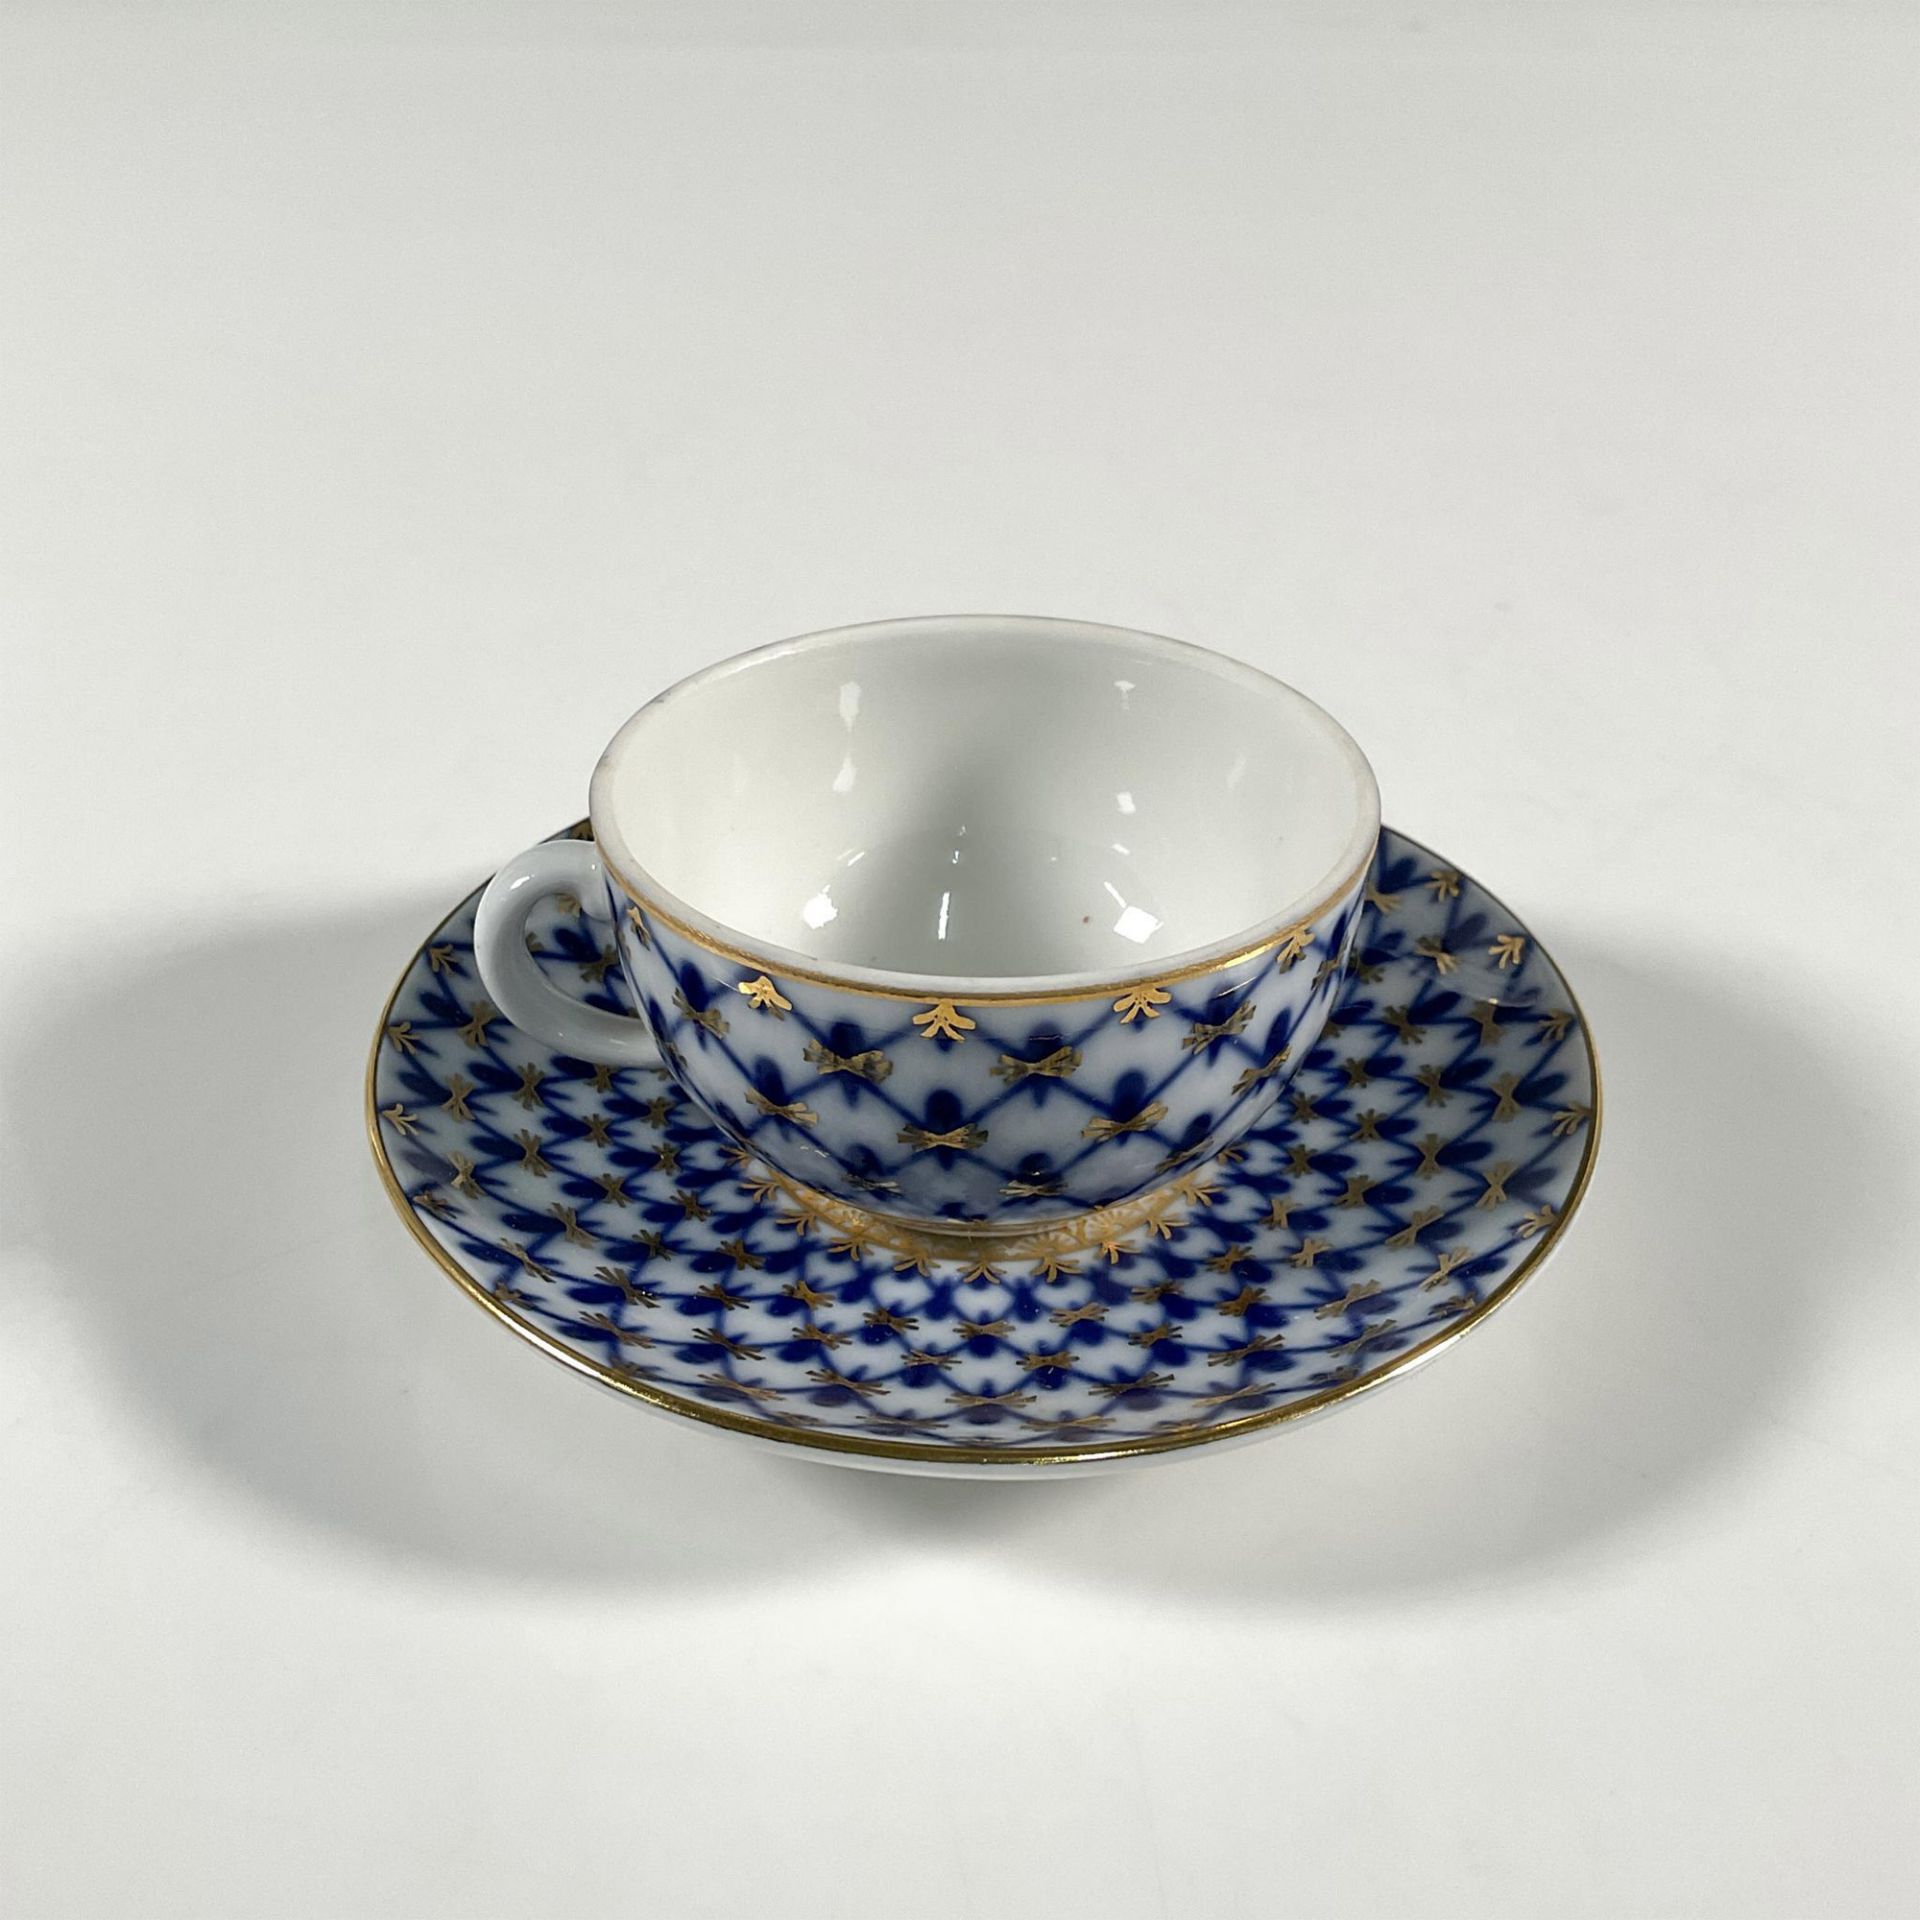 2pc Lomonosov Porcelain Demitasse Cup and Saucer - Image 2 of 4